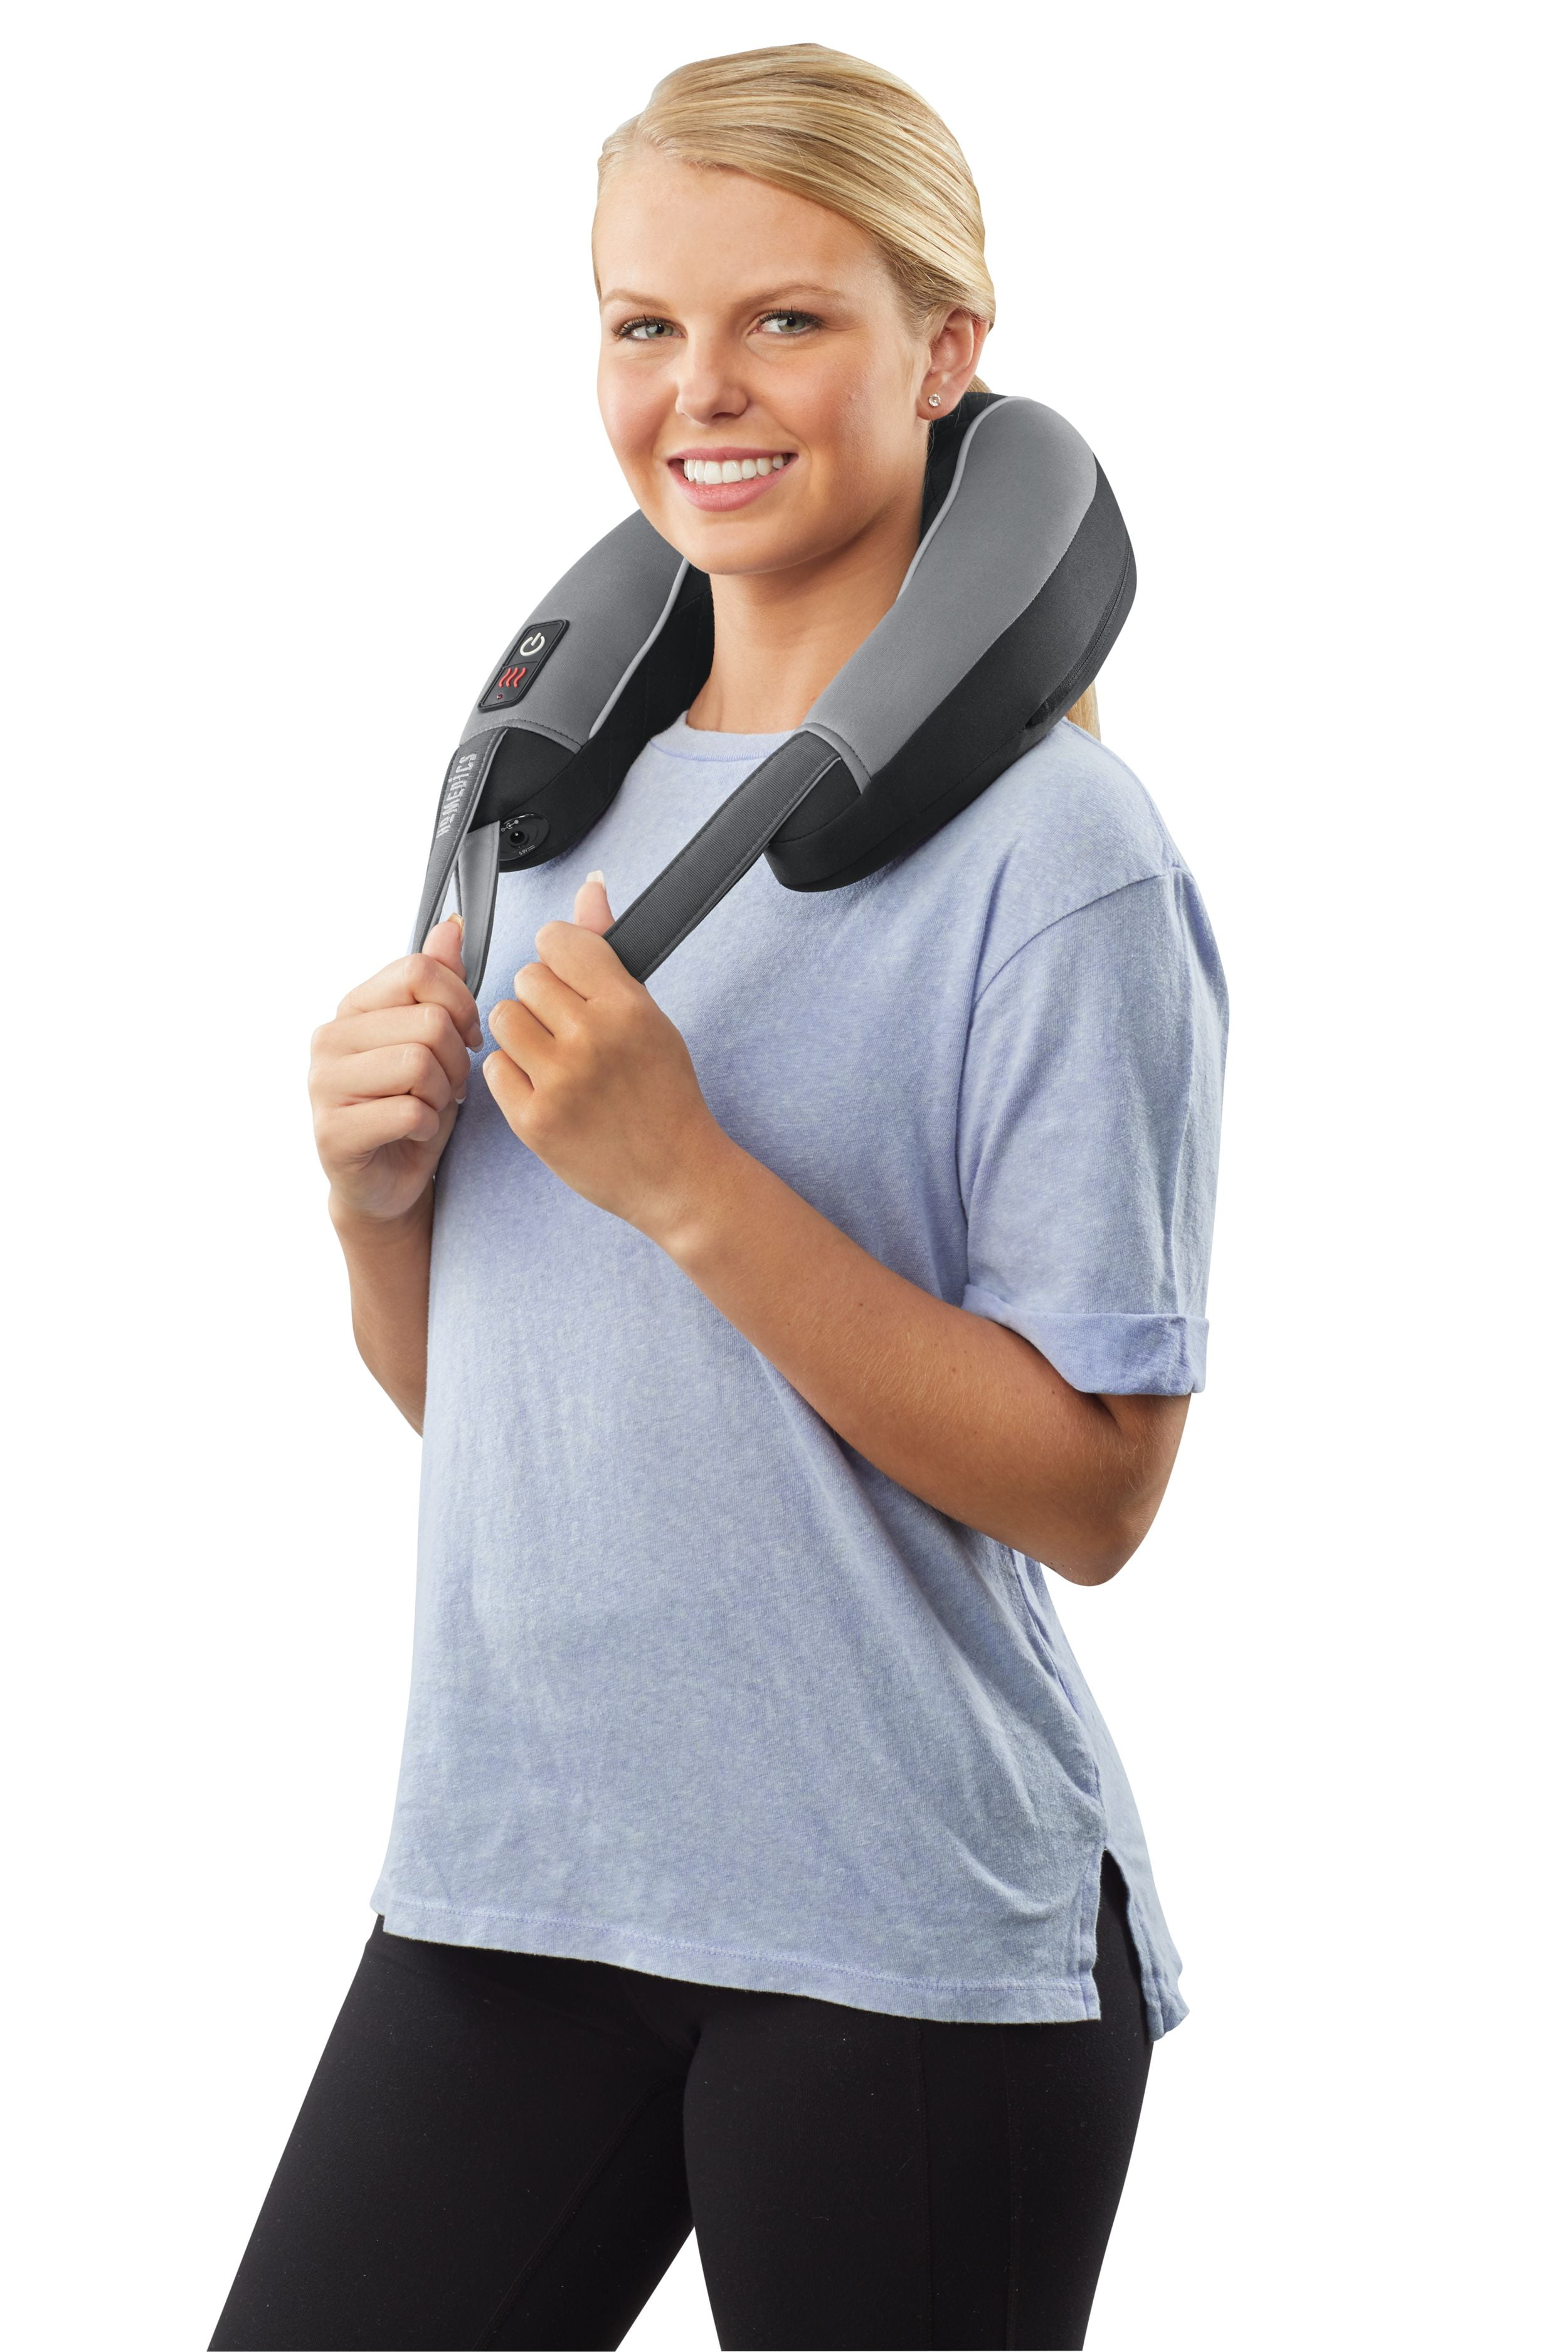 Homedics Neck Massager with Heat - Pro Therapy Elite Portable, Adjustable  Shiatsu and Vibration Massage